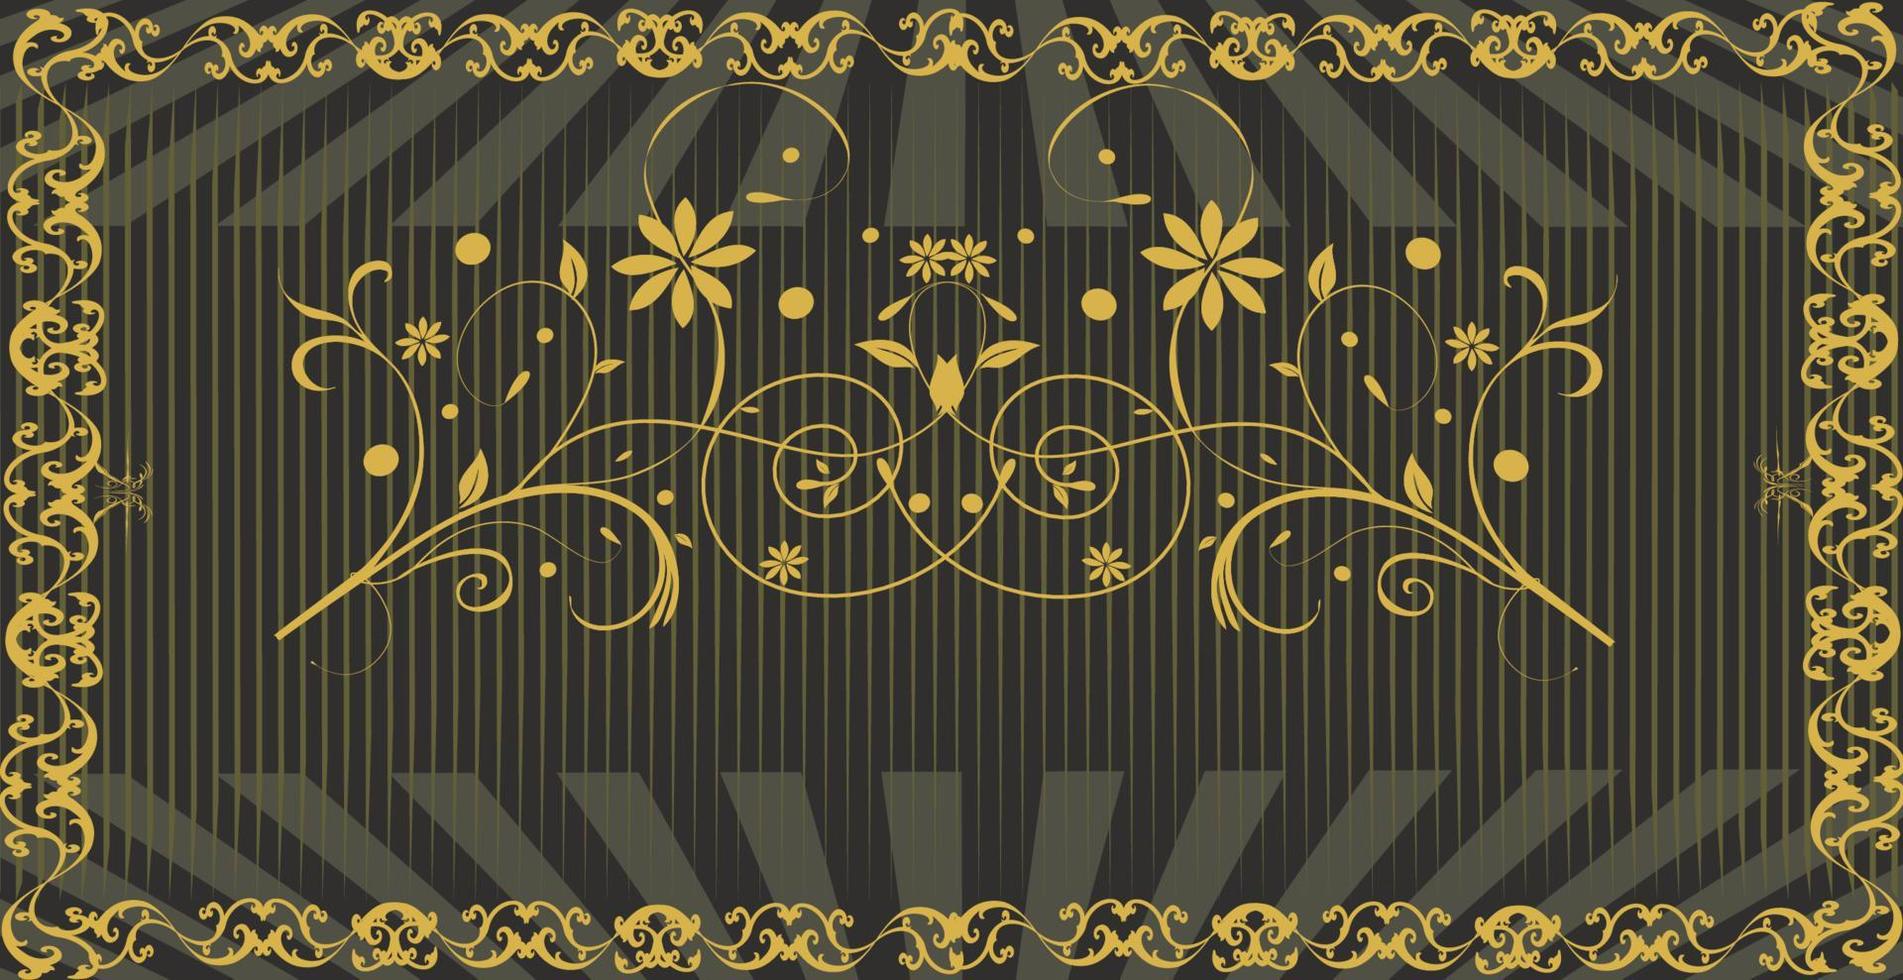 tabuleta vintage com design floral abstrato retrô elegante ornamentado vetor